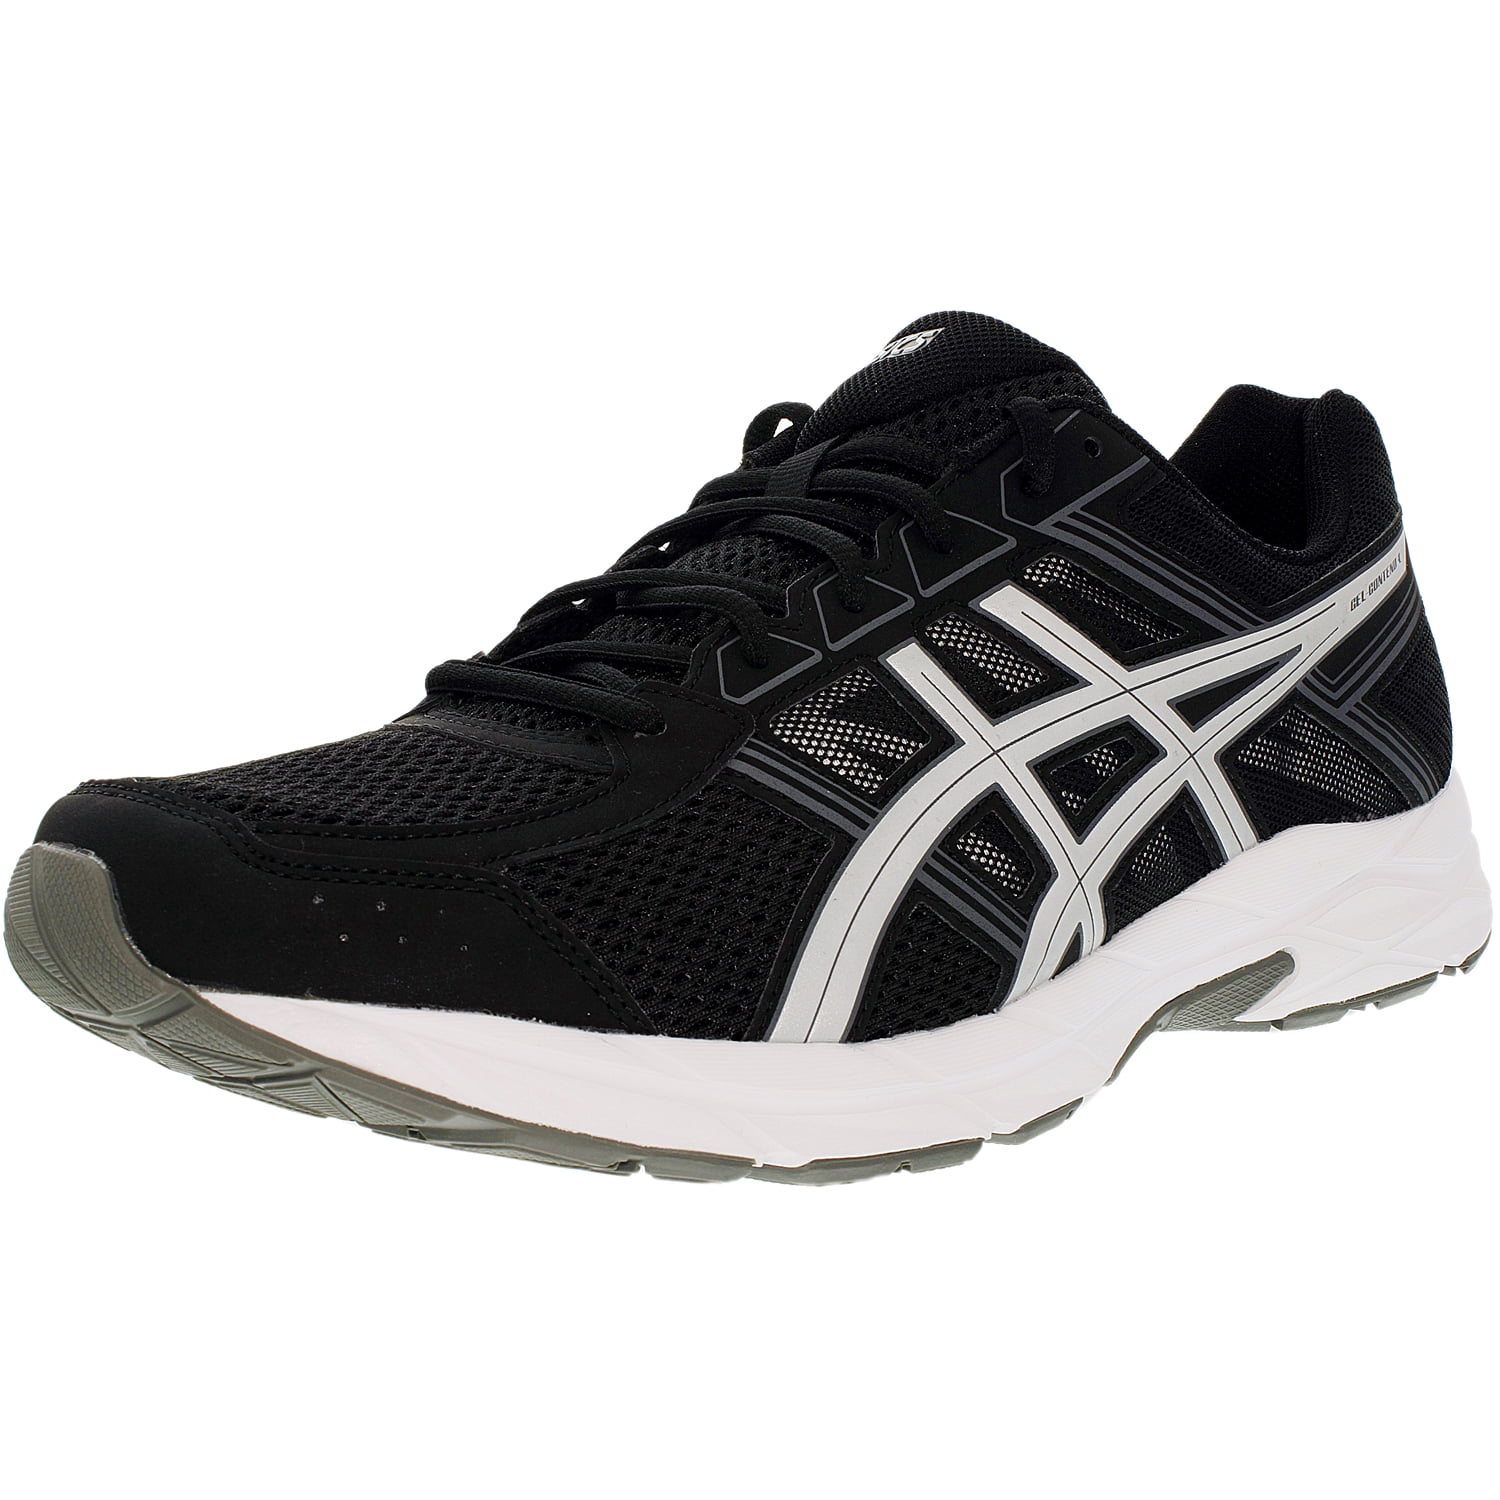 Asics Men's Gel-Contend 4 Black/Silver/Carbon Ankle-High Running Shoe ...